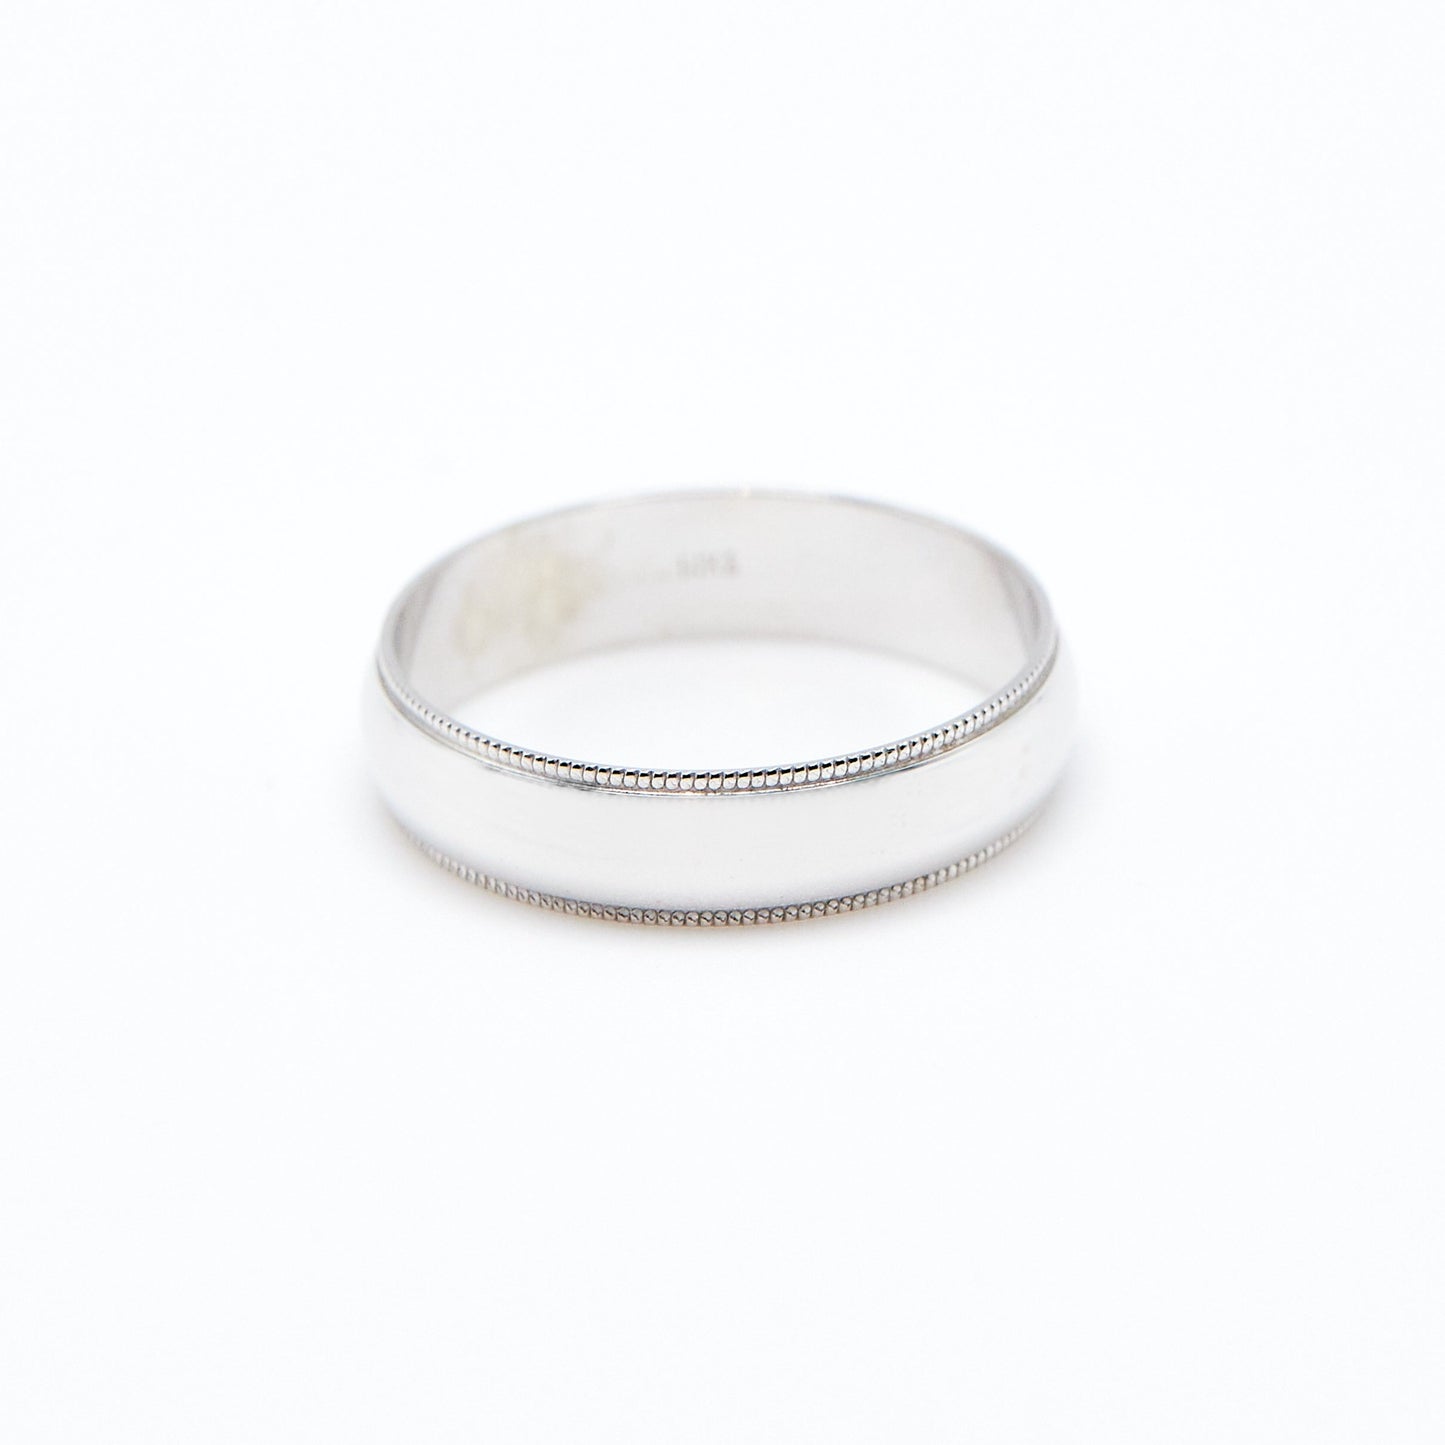 white gold 5mm half round wedding band with milgrain details on white background